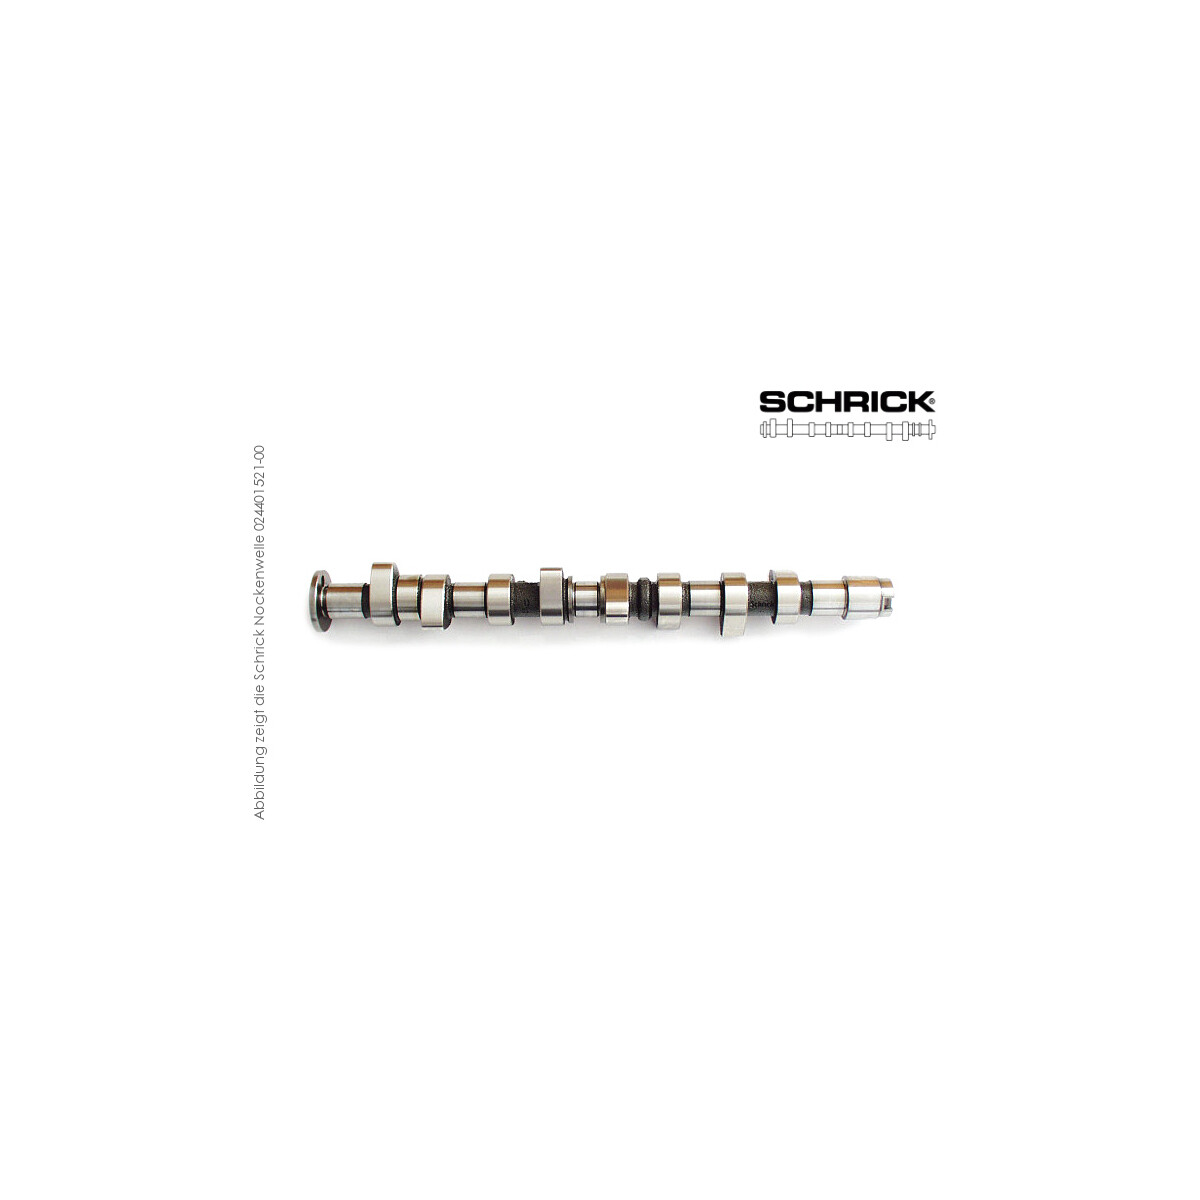 Schrick Nockenwelle für Seat Toledo, Cordoba, Ibiza | 1,5-2,0L 8V 4-Zyl. 827  | 276° Synchron (Schrick 001401760-00)